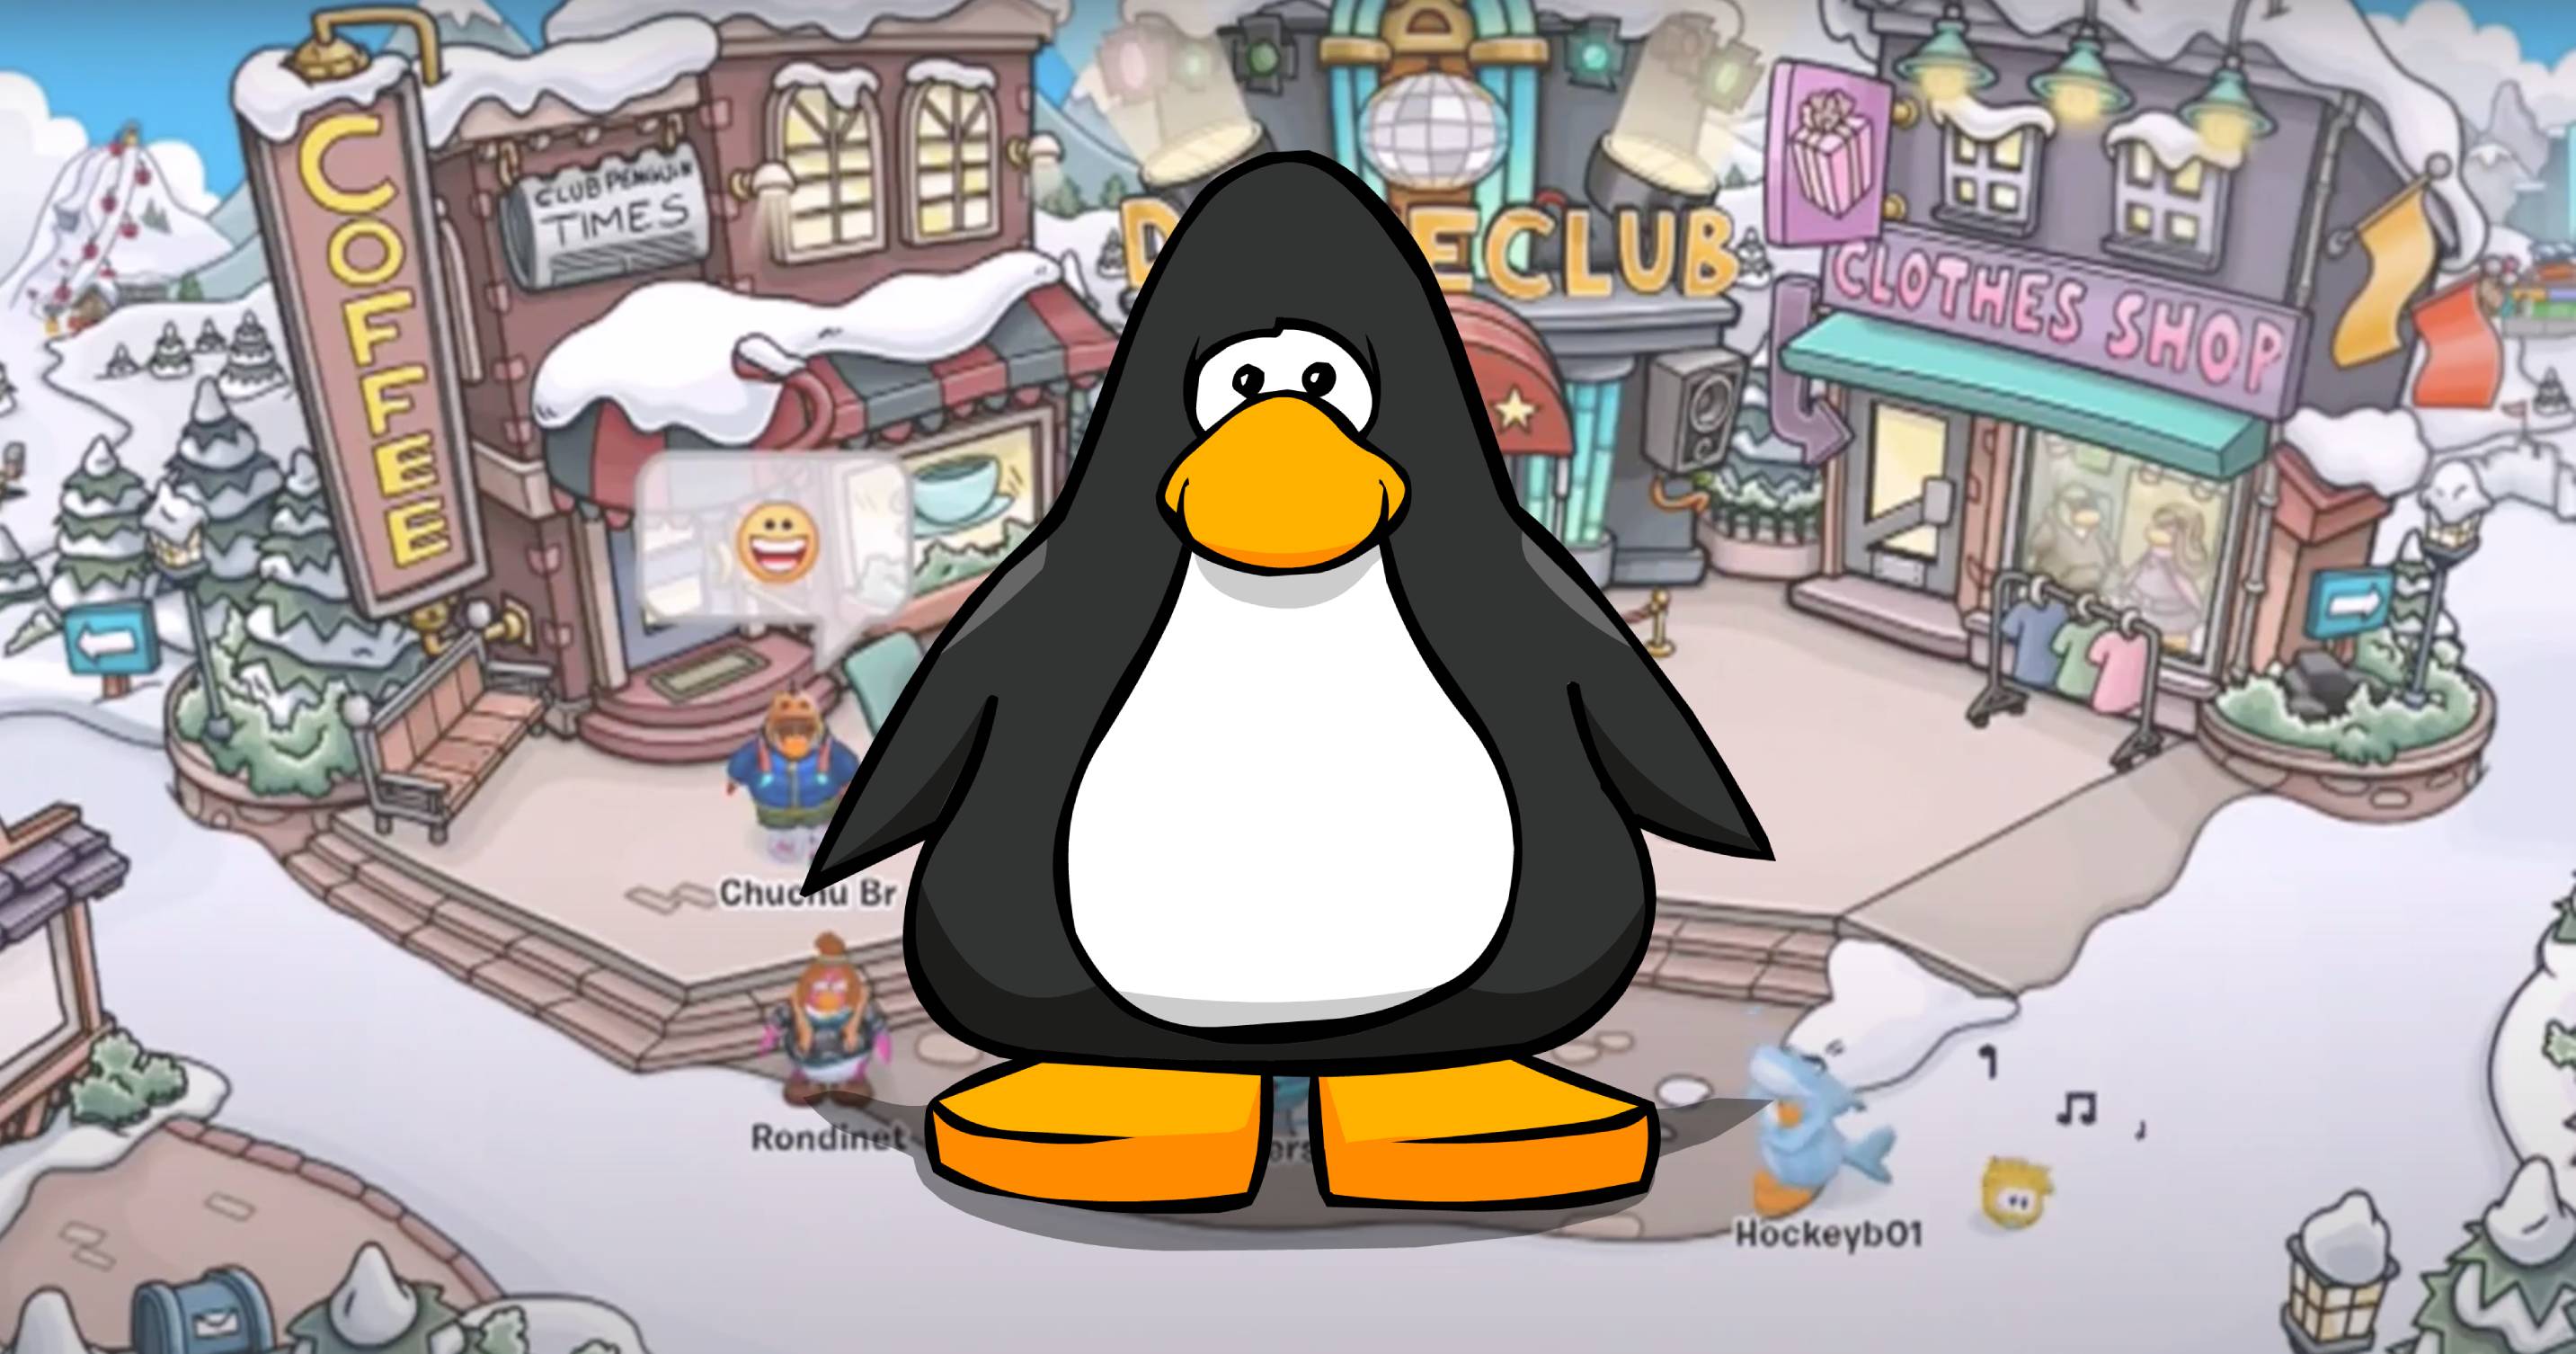 Club Penguin Rewritten shut down, turned over to police - GamesHub